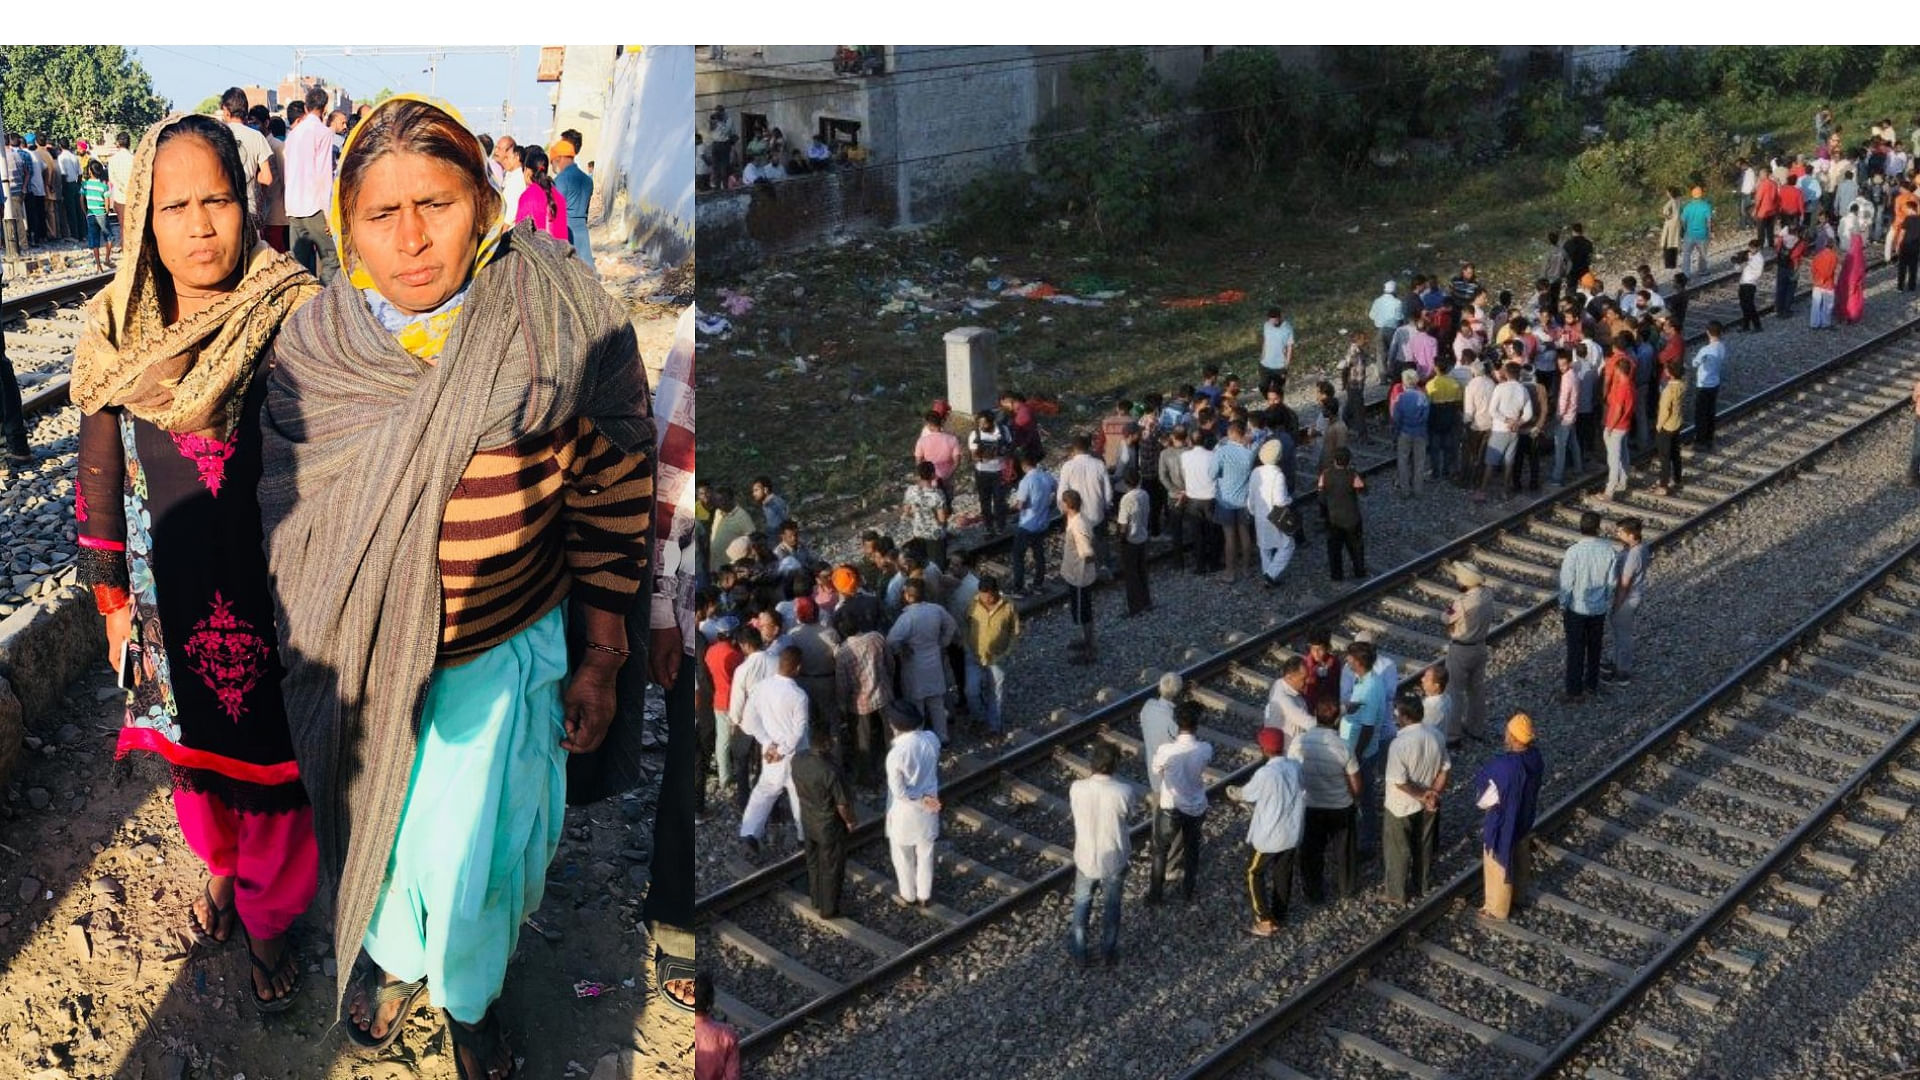 Walking on the tracks is 60-year-old Rekha telling people how her nephew, Aashu, looked.